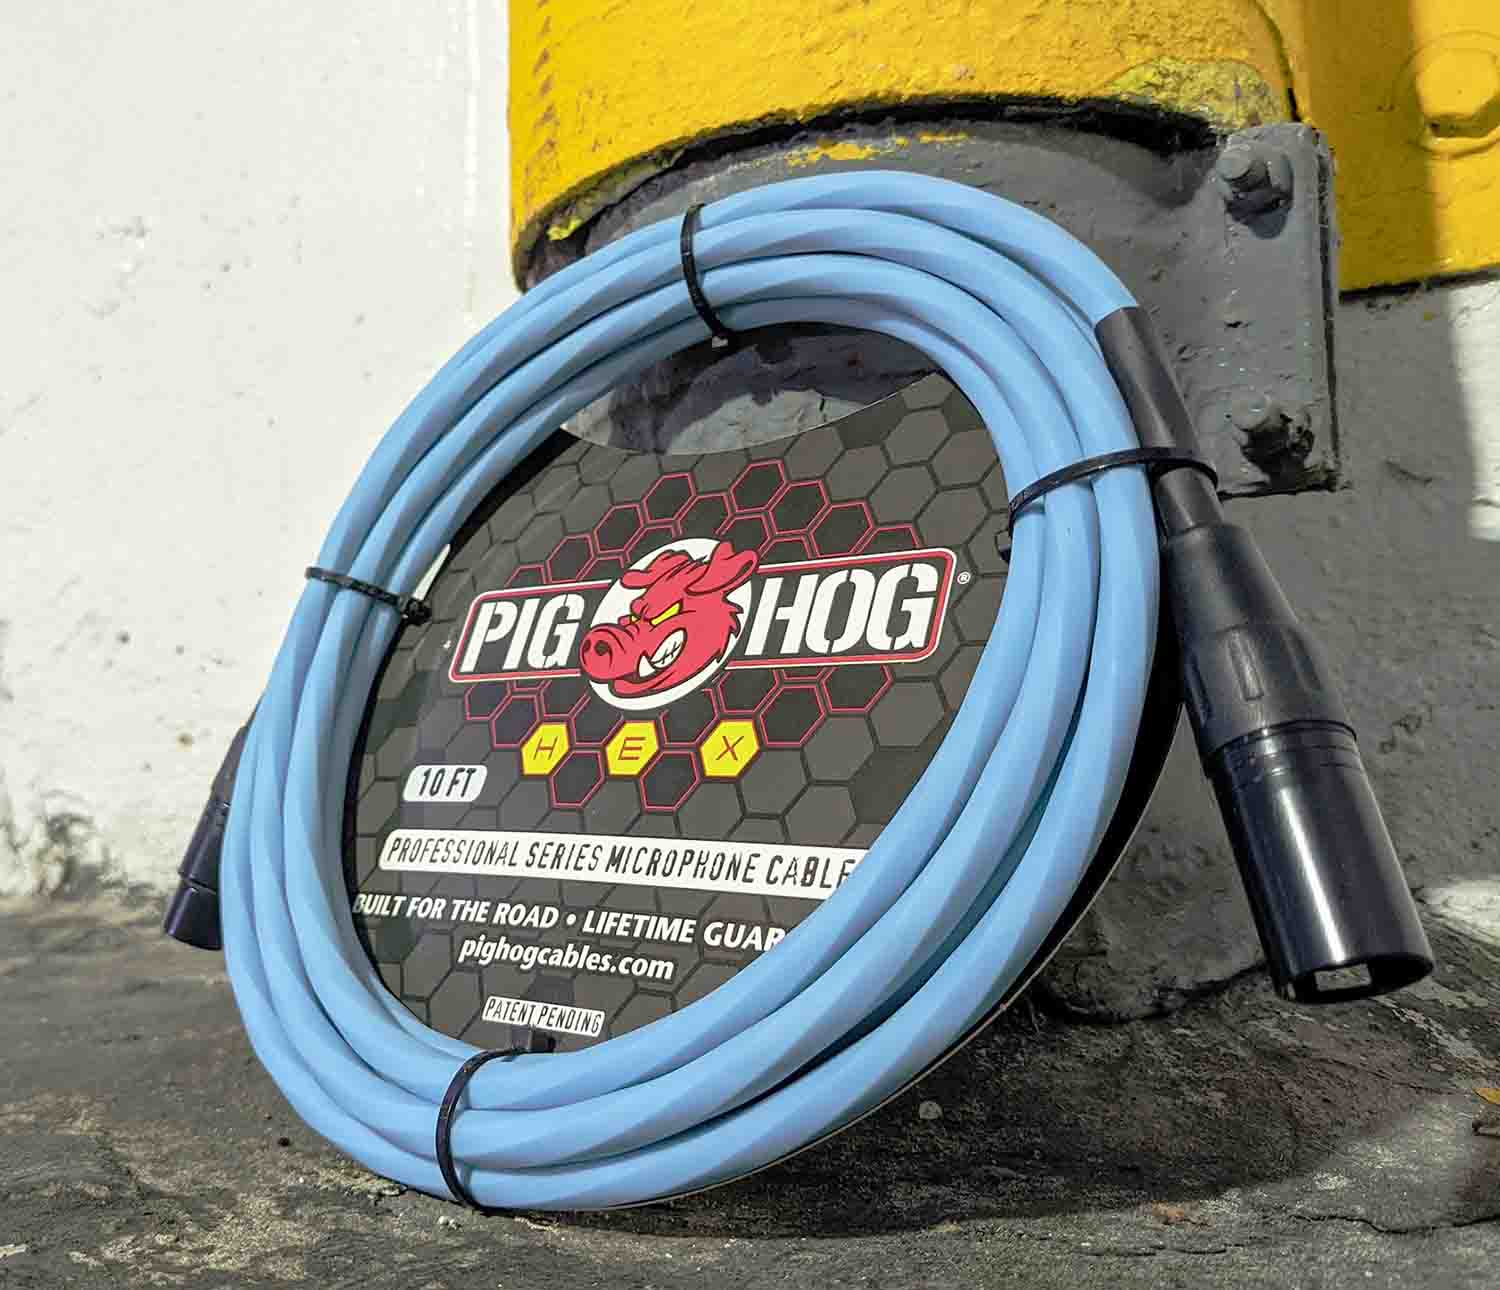 Pig Hog PHMH10DB, Hex Series Mic Cables - (Daphne Blue, 10ft) - Hollywood DJ